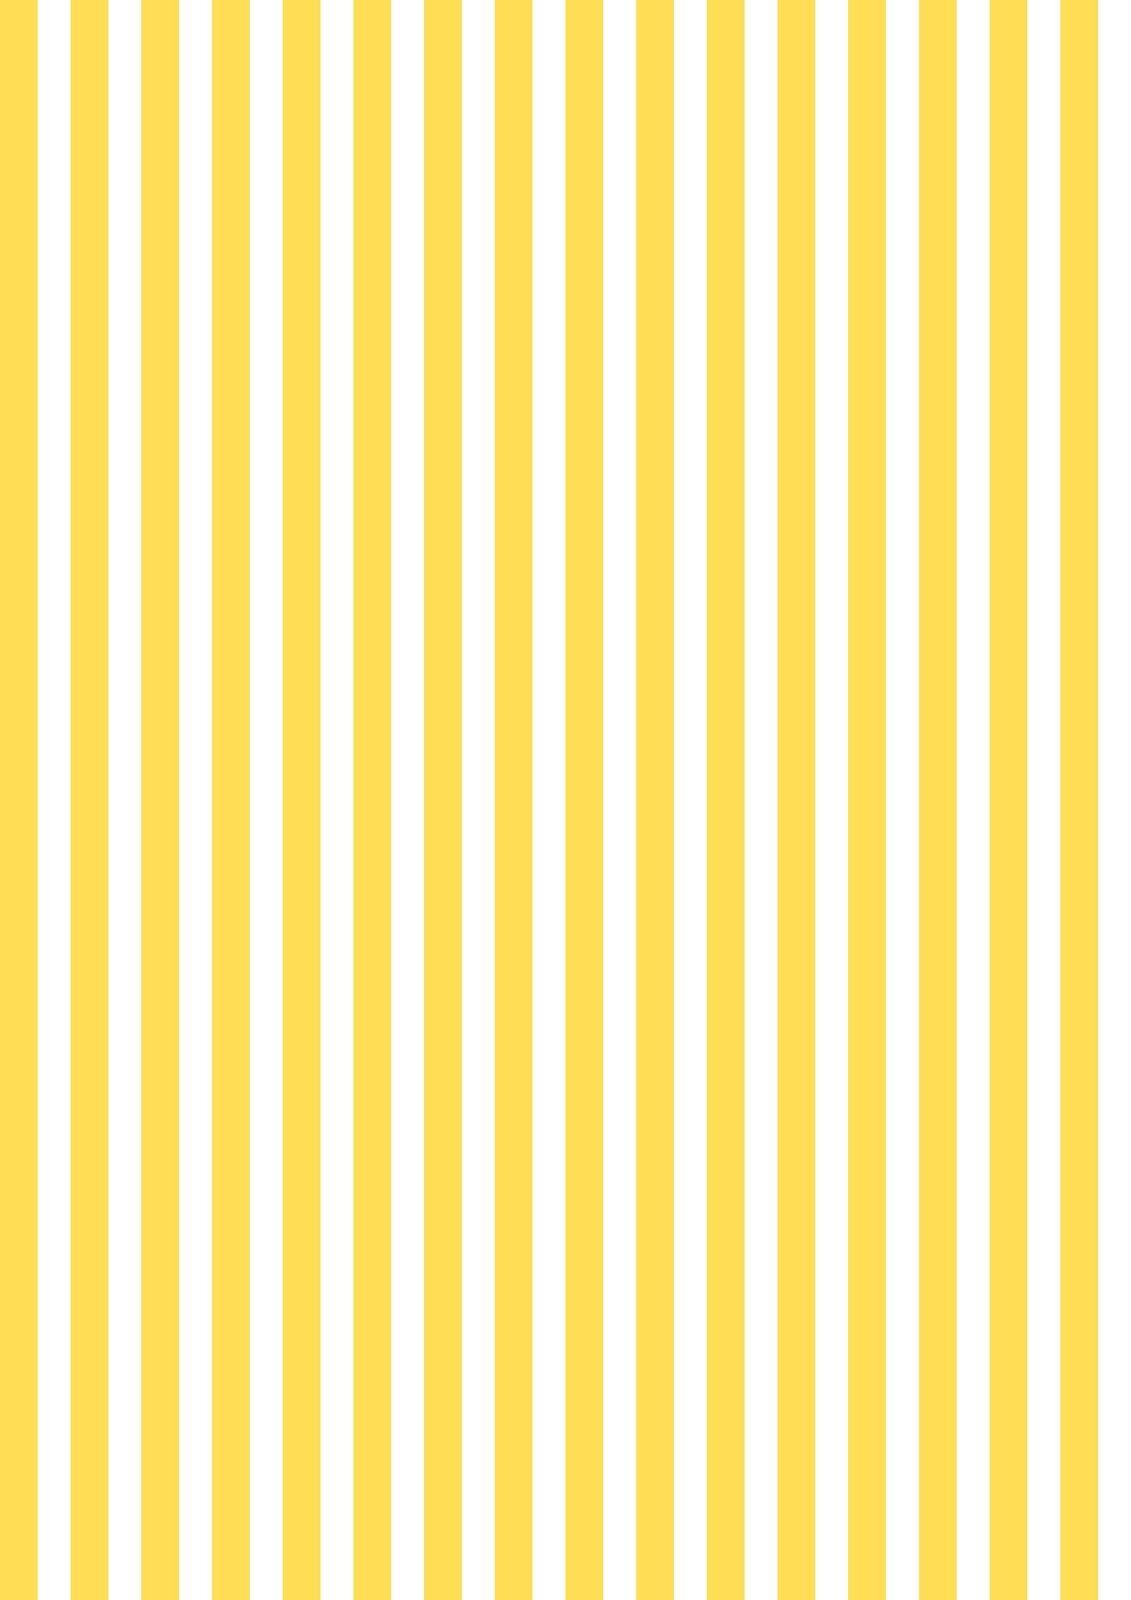 White Stripes with Yellow Logo - Free digital striped scrapbooking paper - ausdruckbares ...